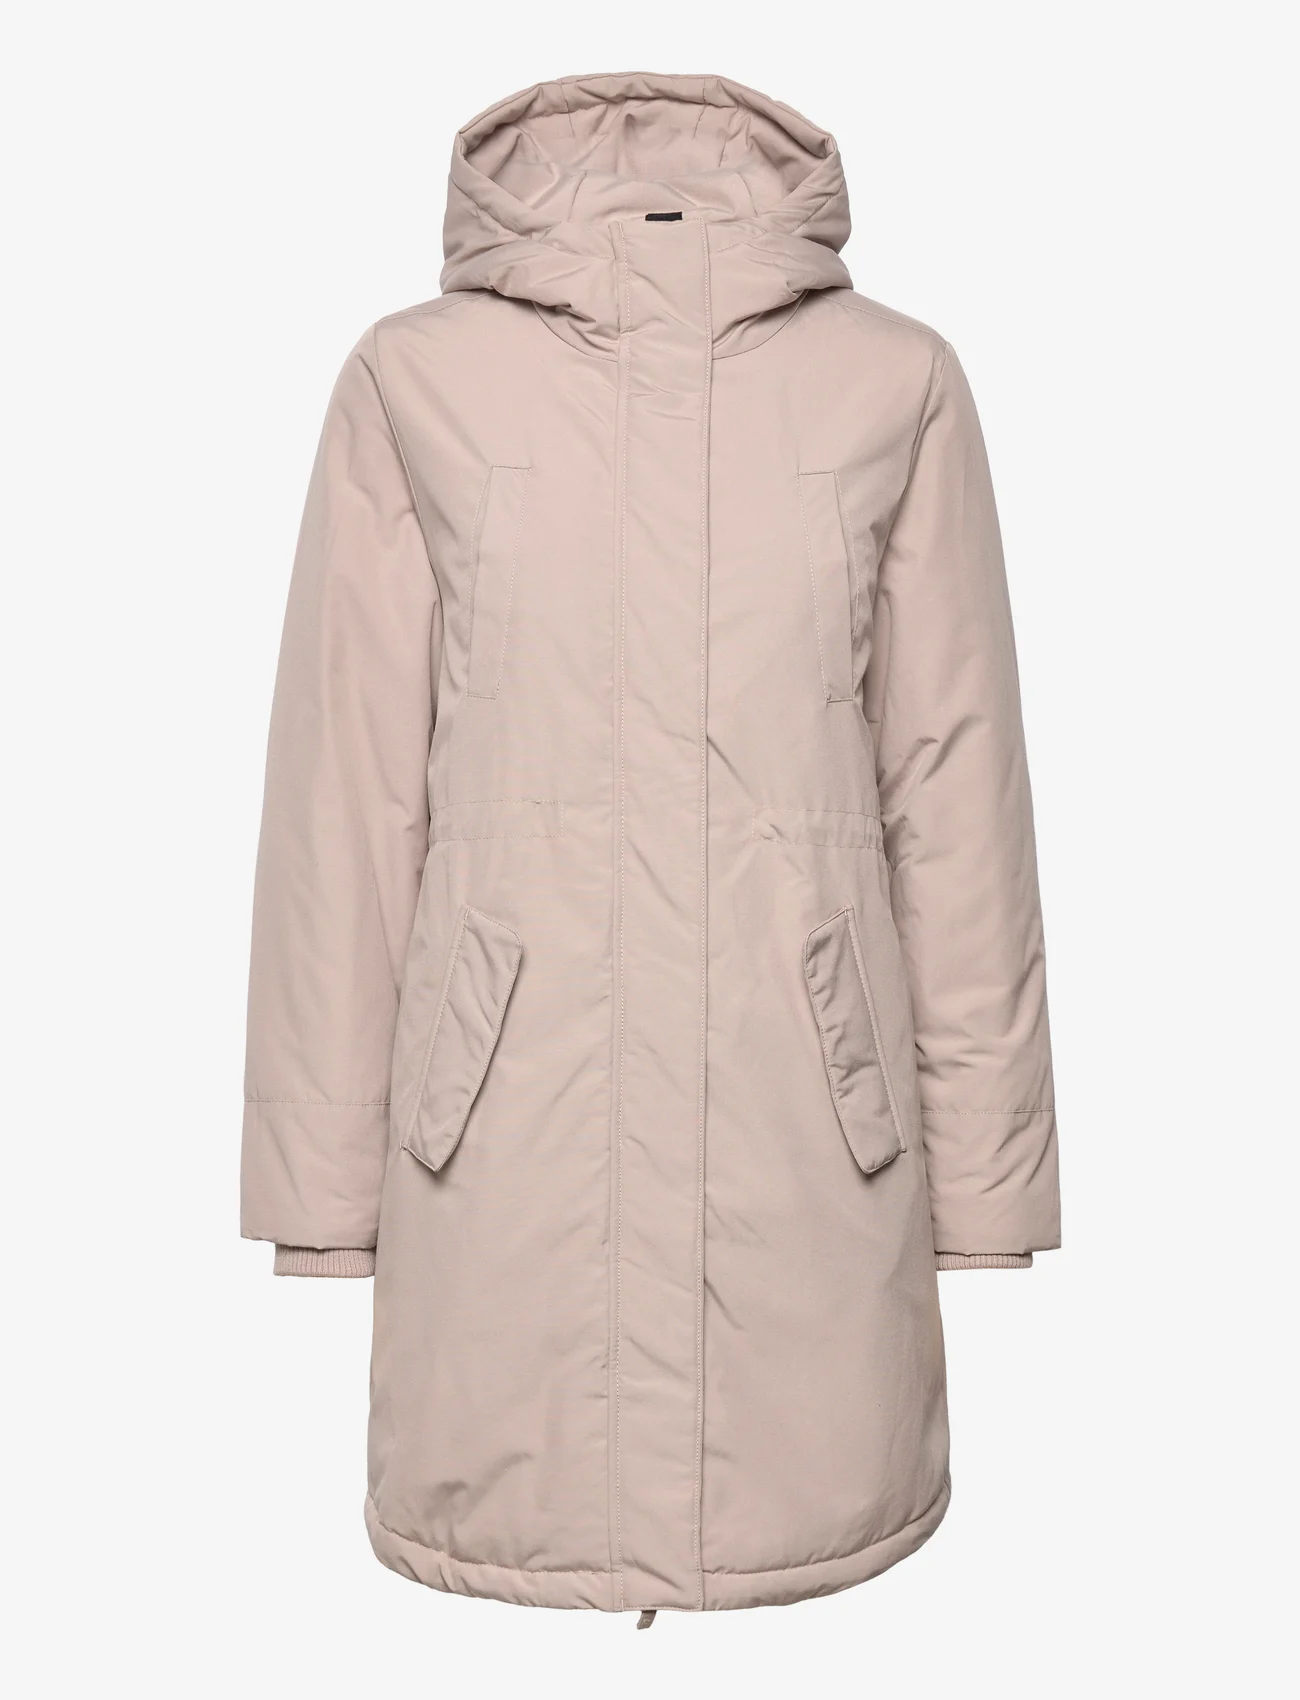 Modström - Patricia coat - „parka“ stiliaus paltai - atmosphere - 0